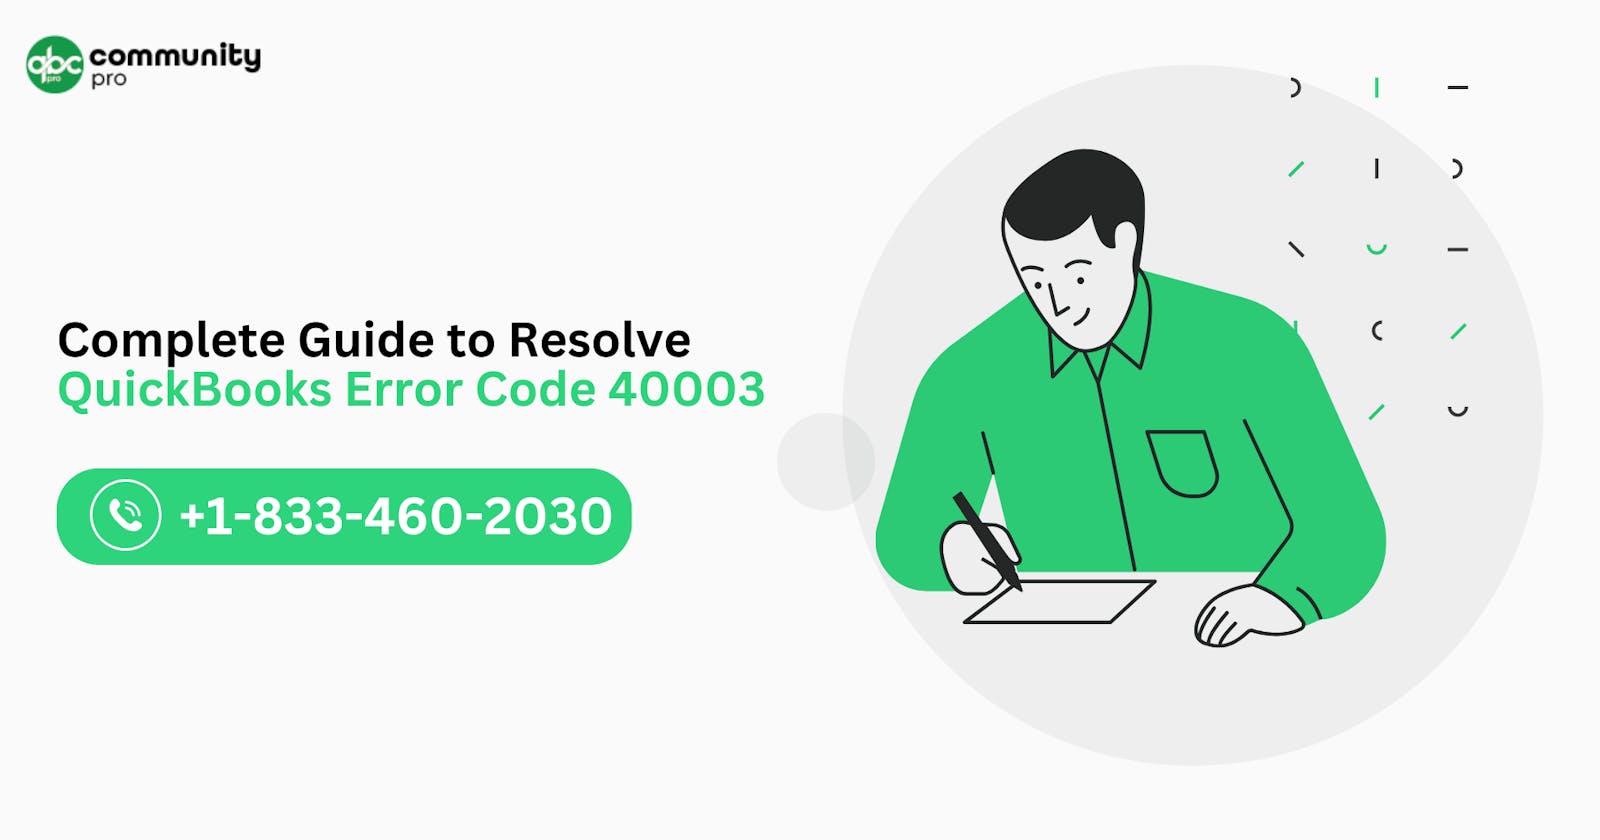 Complete Guide to Resolve QuickBooks Error Code 40003